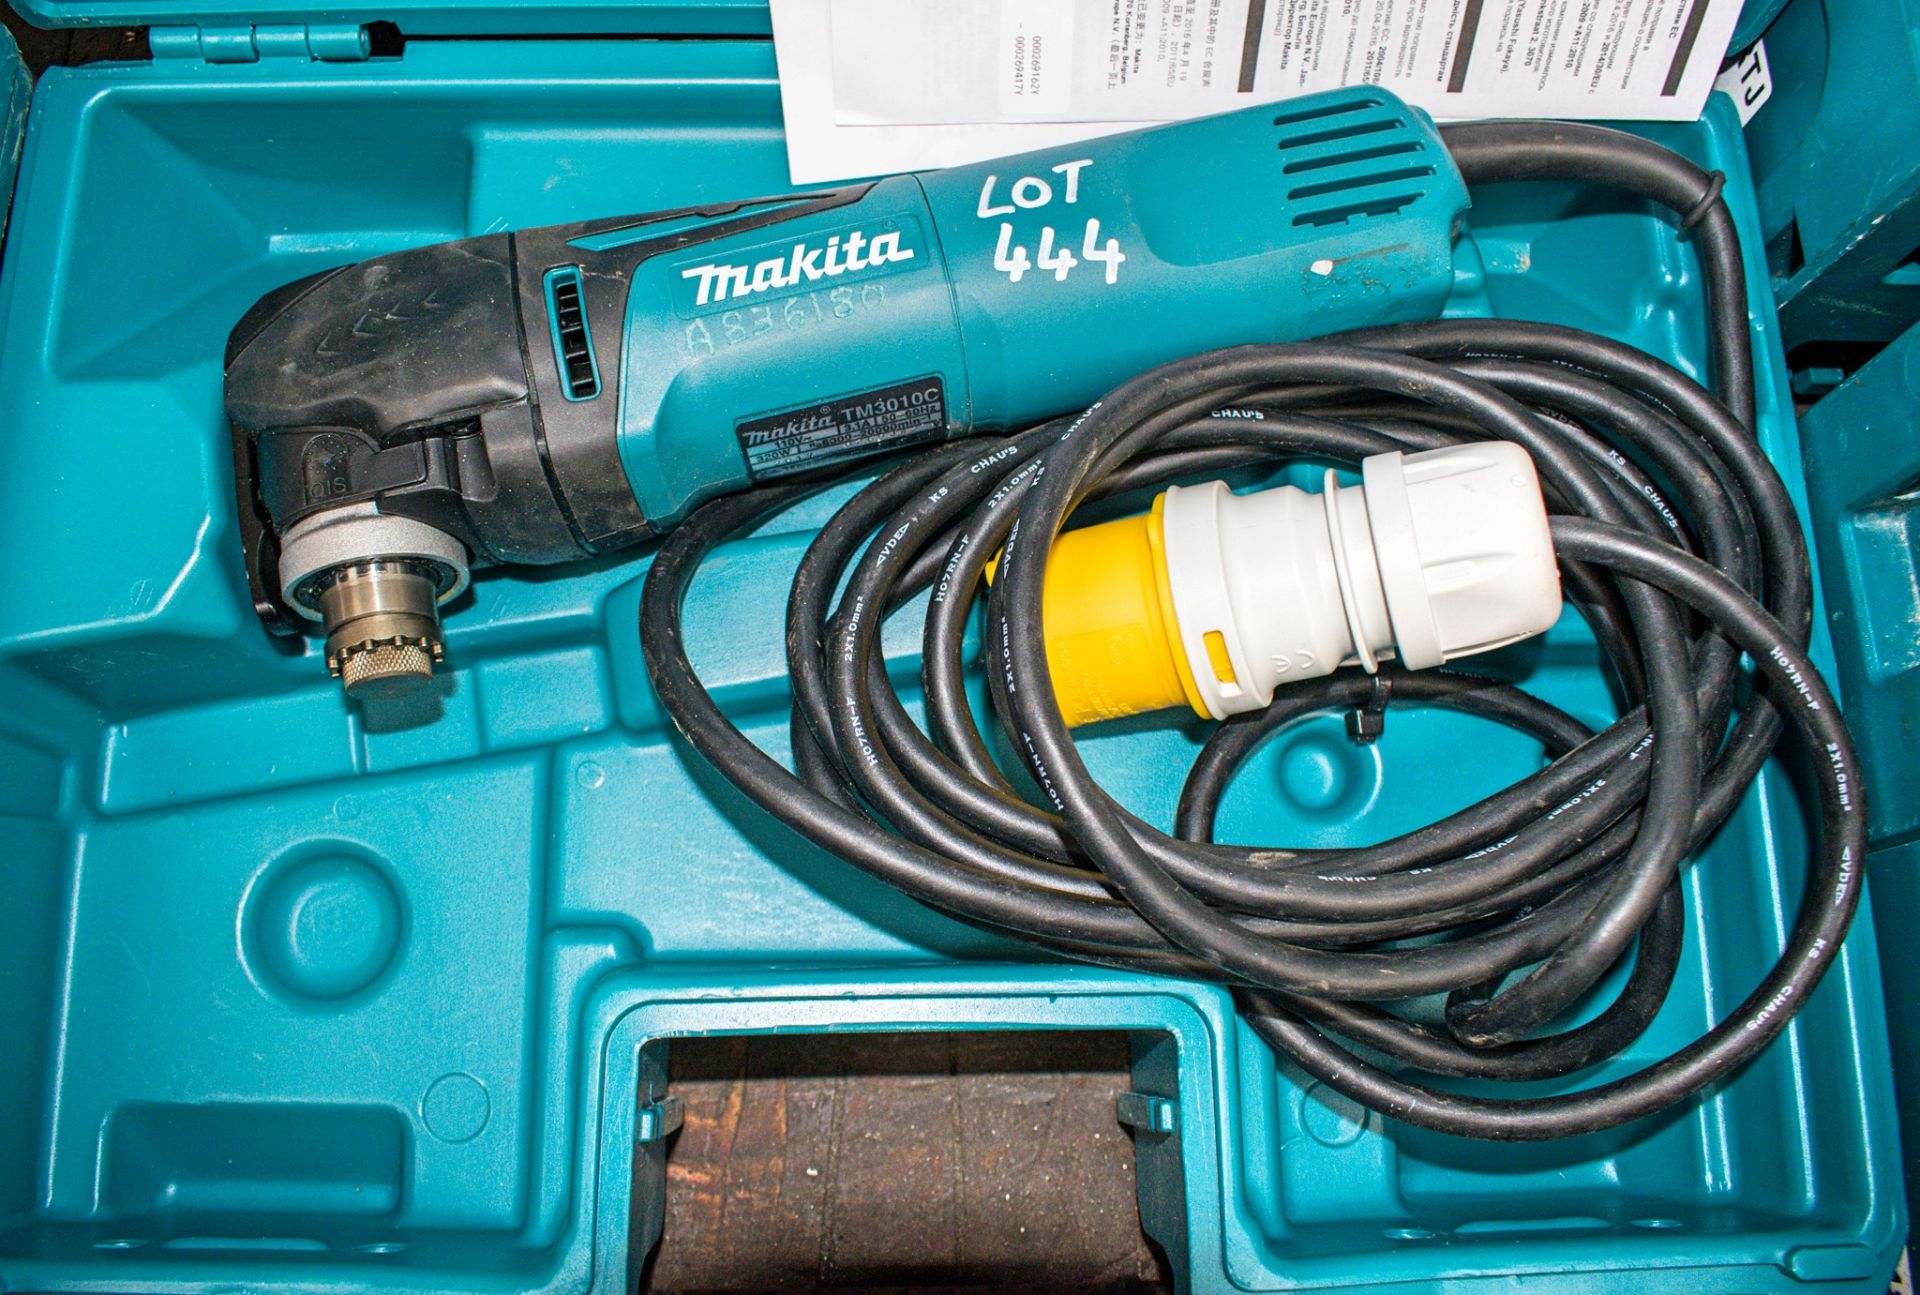 Makita TM 301-0C 110v multi tool c/w carry case A836180